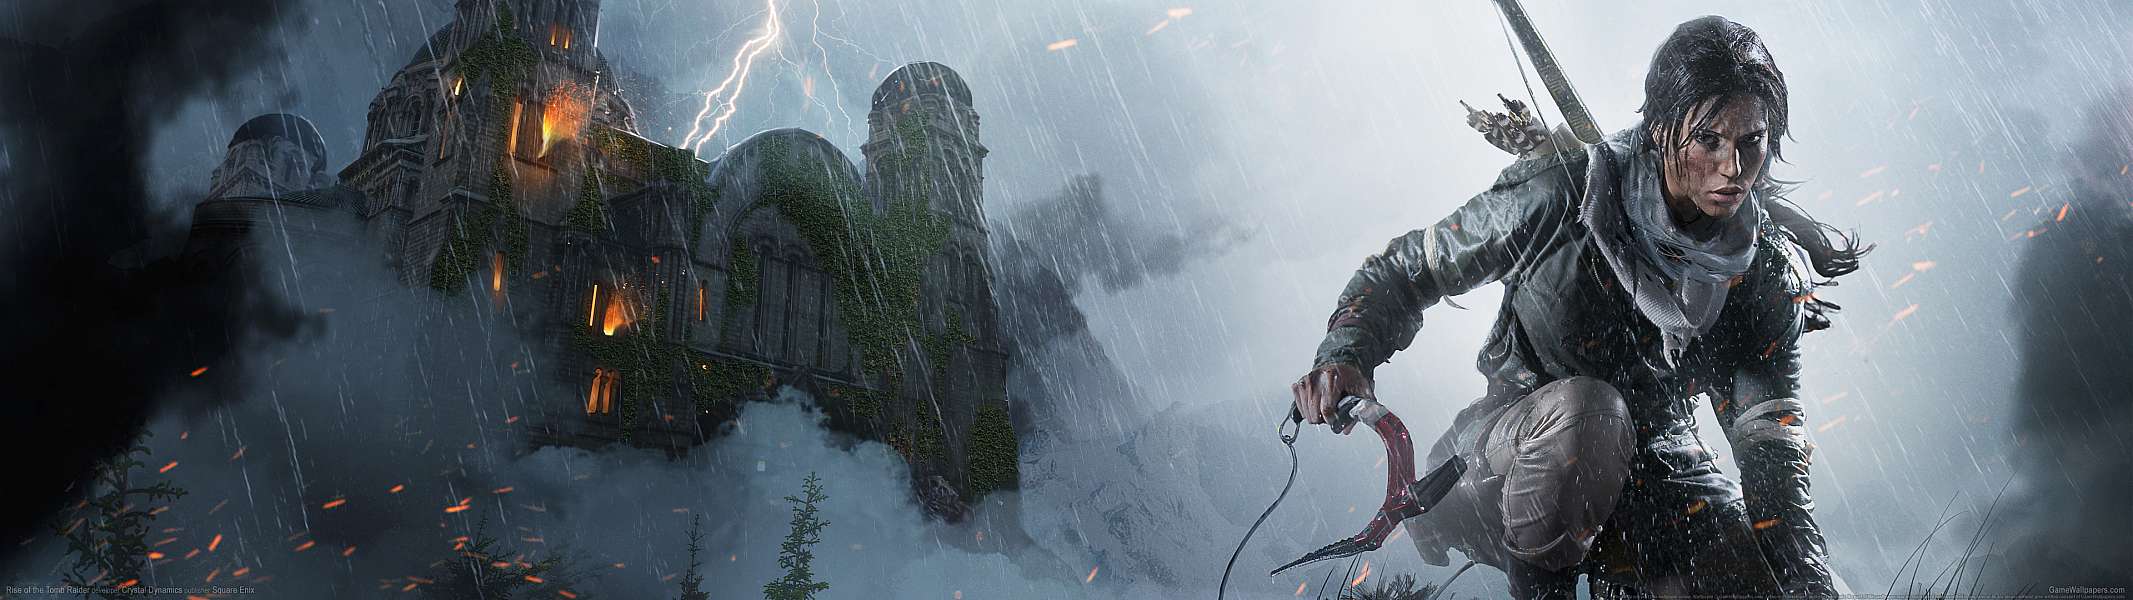 Rise of the Tomb Raider dual screen fond d'écran